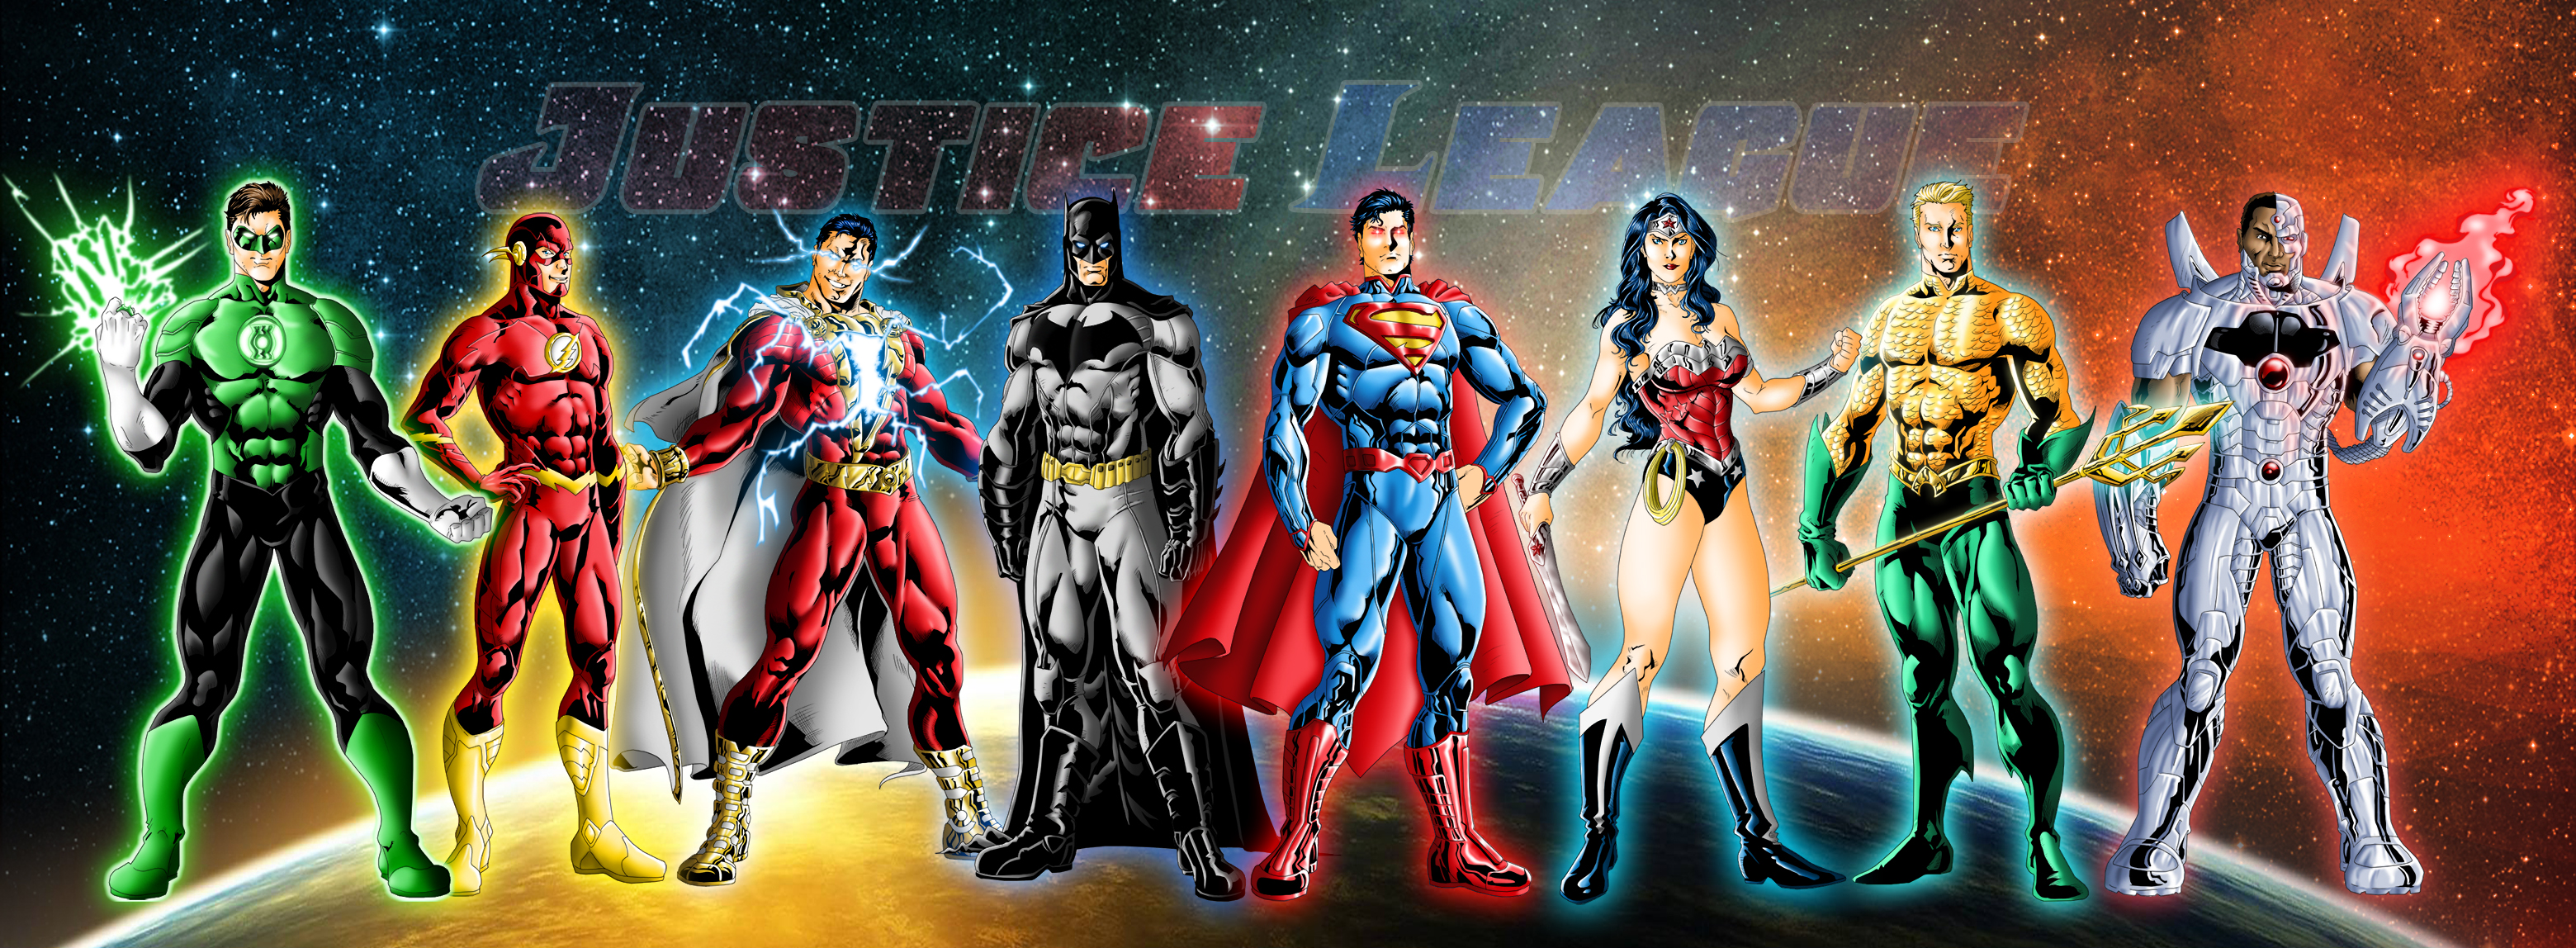 superman, batman, aquaman, comics, justice league, barry allen, billy batson, cyborg (dc comics), dc comics, diana prince, flash, green lantern, hal jordan, shazam (dc comics), superhero, wonder woman iphone wallpaper